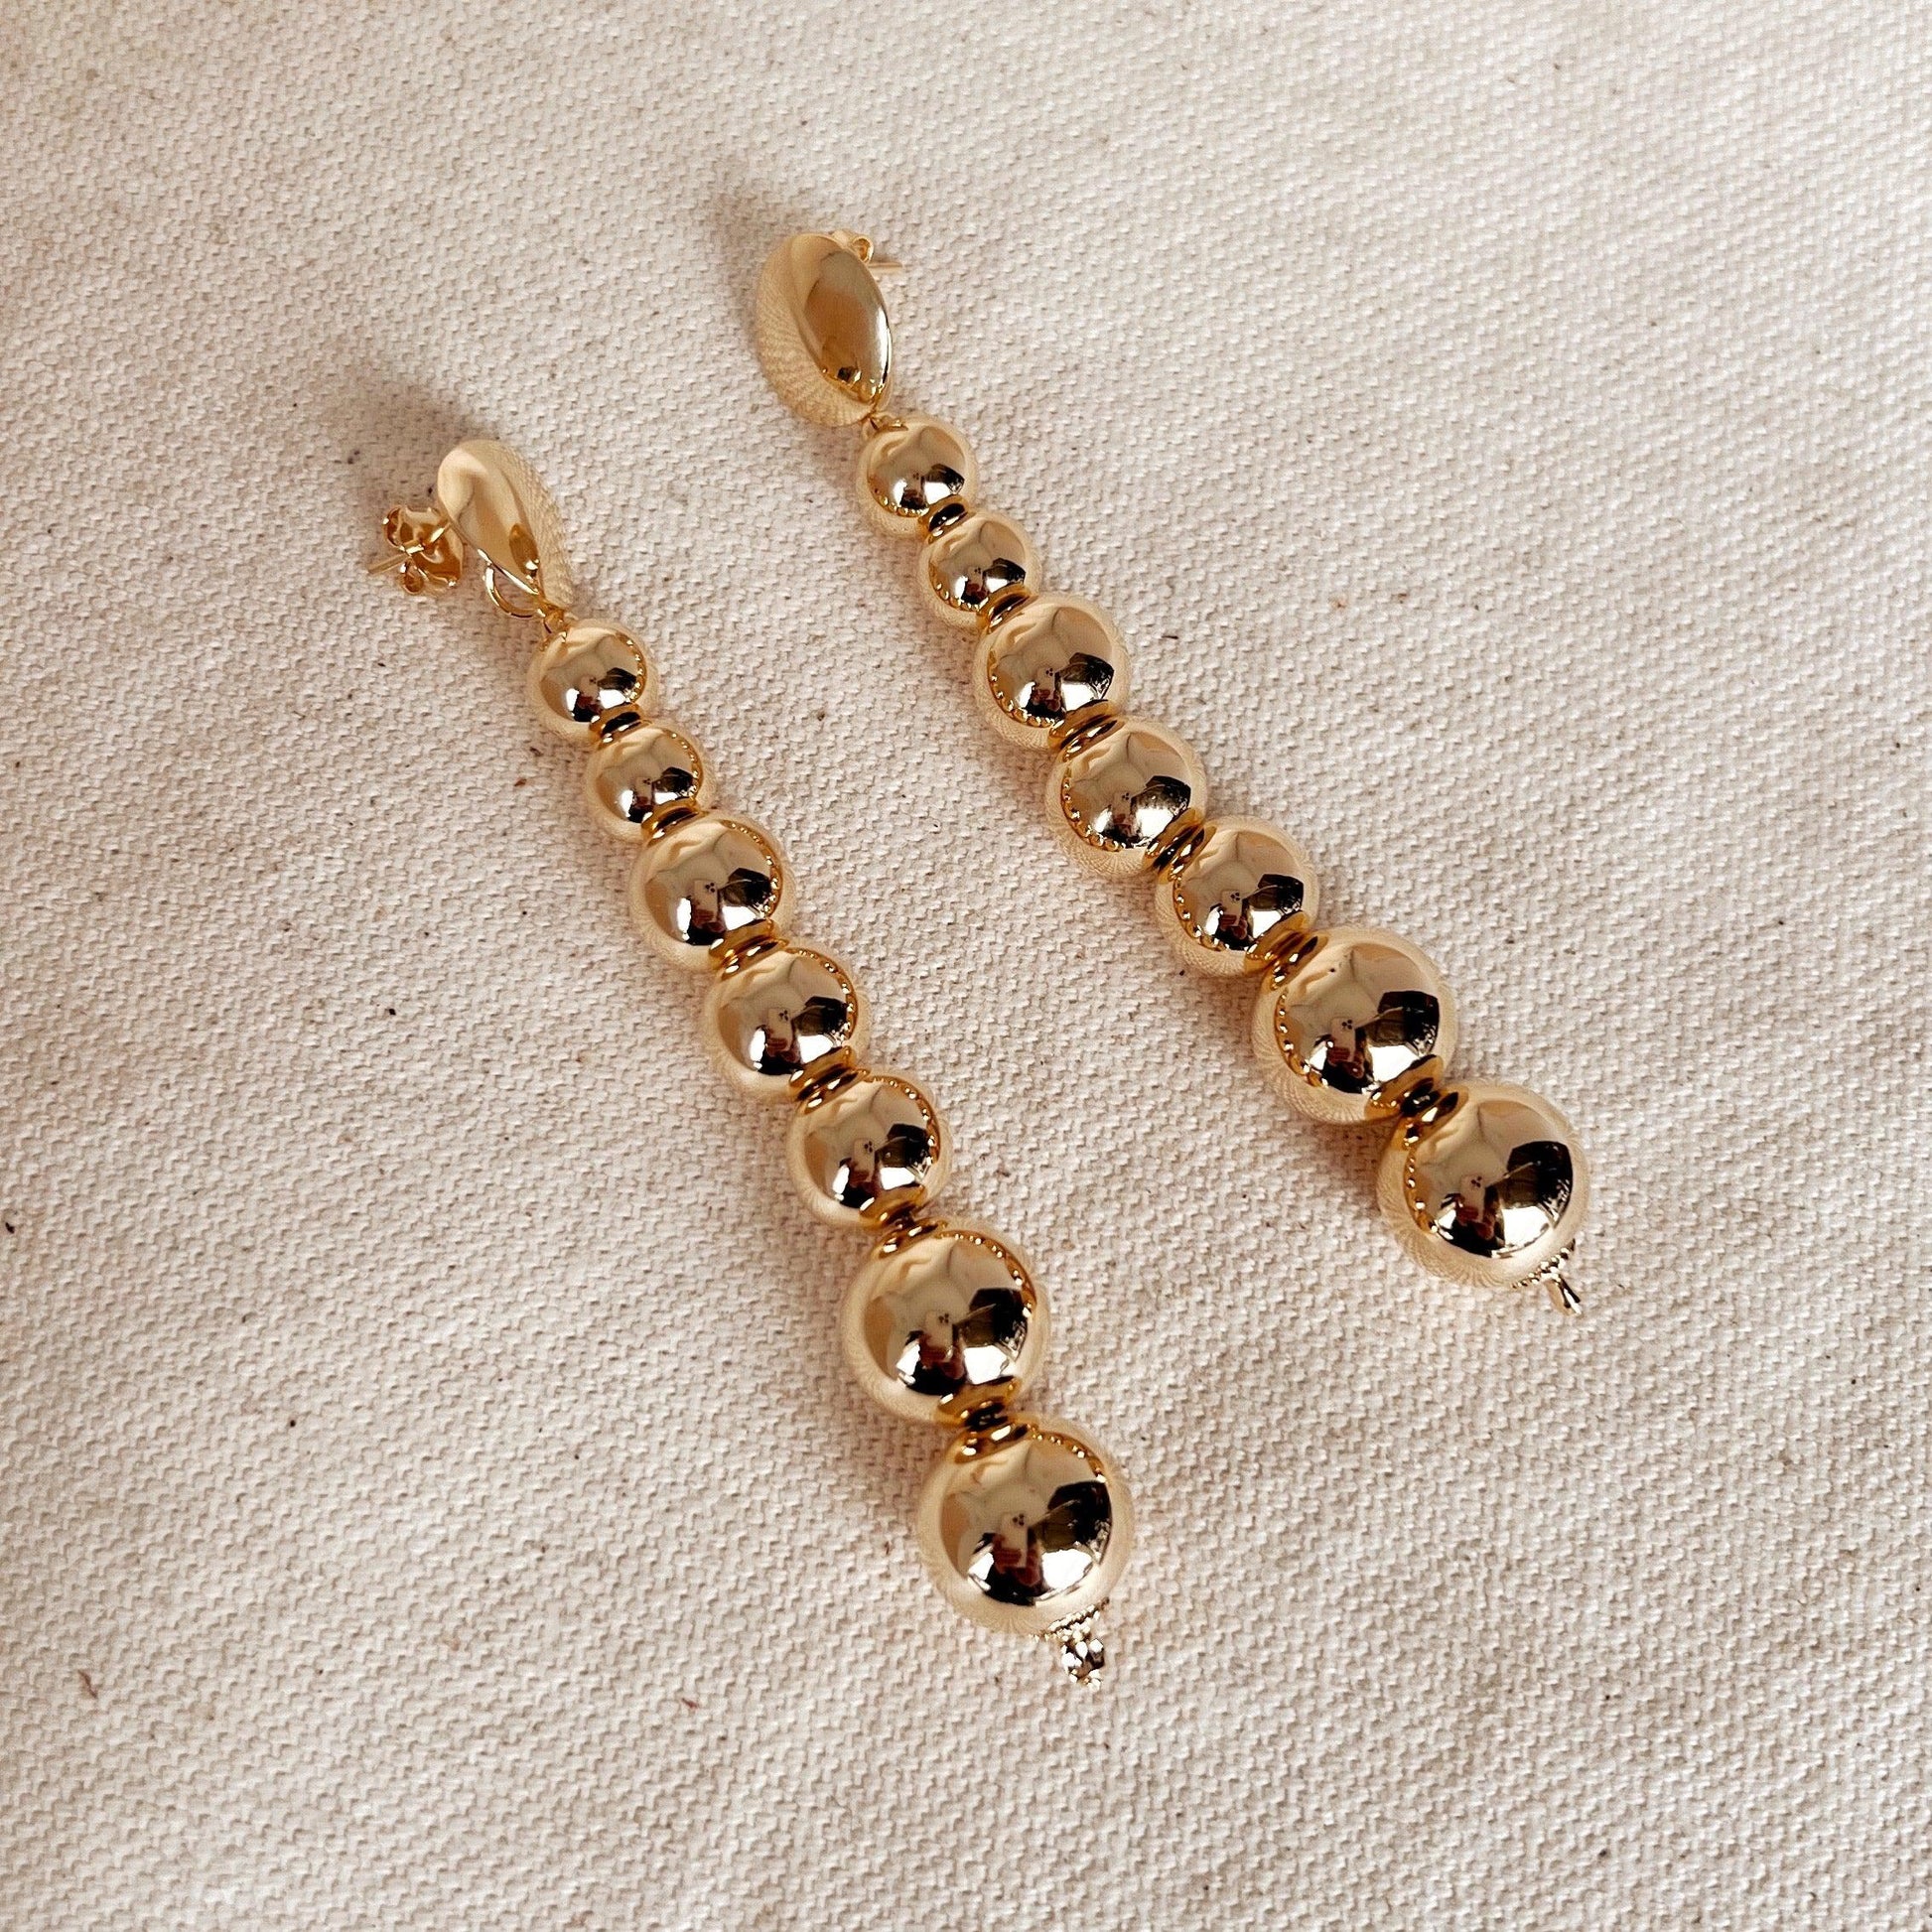 GoldFi 18k Gold Filled Dangling Gradient Beads Earrings